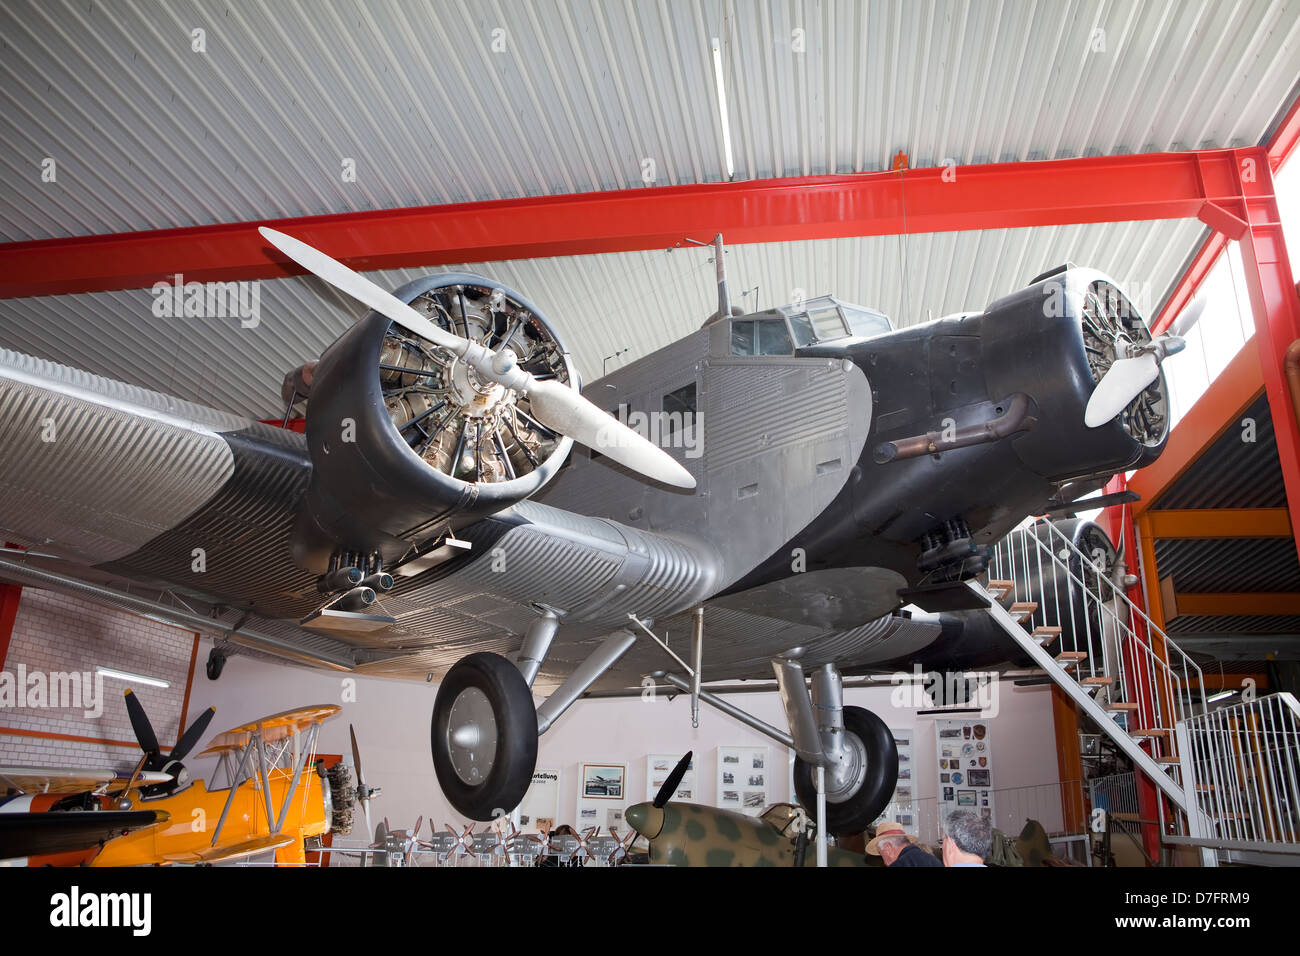 Dettaglio dei passeggeri aerei Junkers Ju-52, Germania, Europa Foto Stock